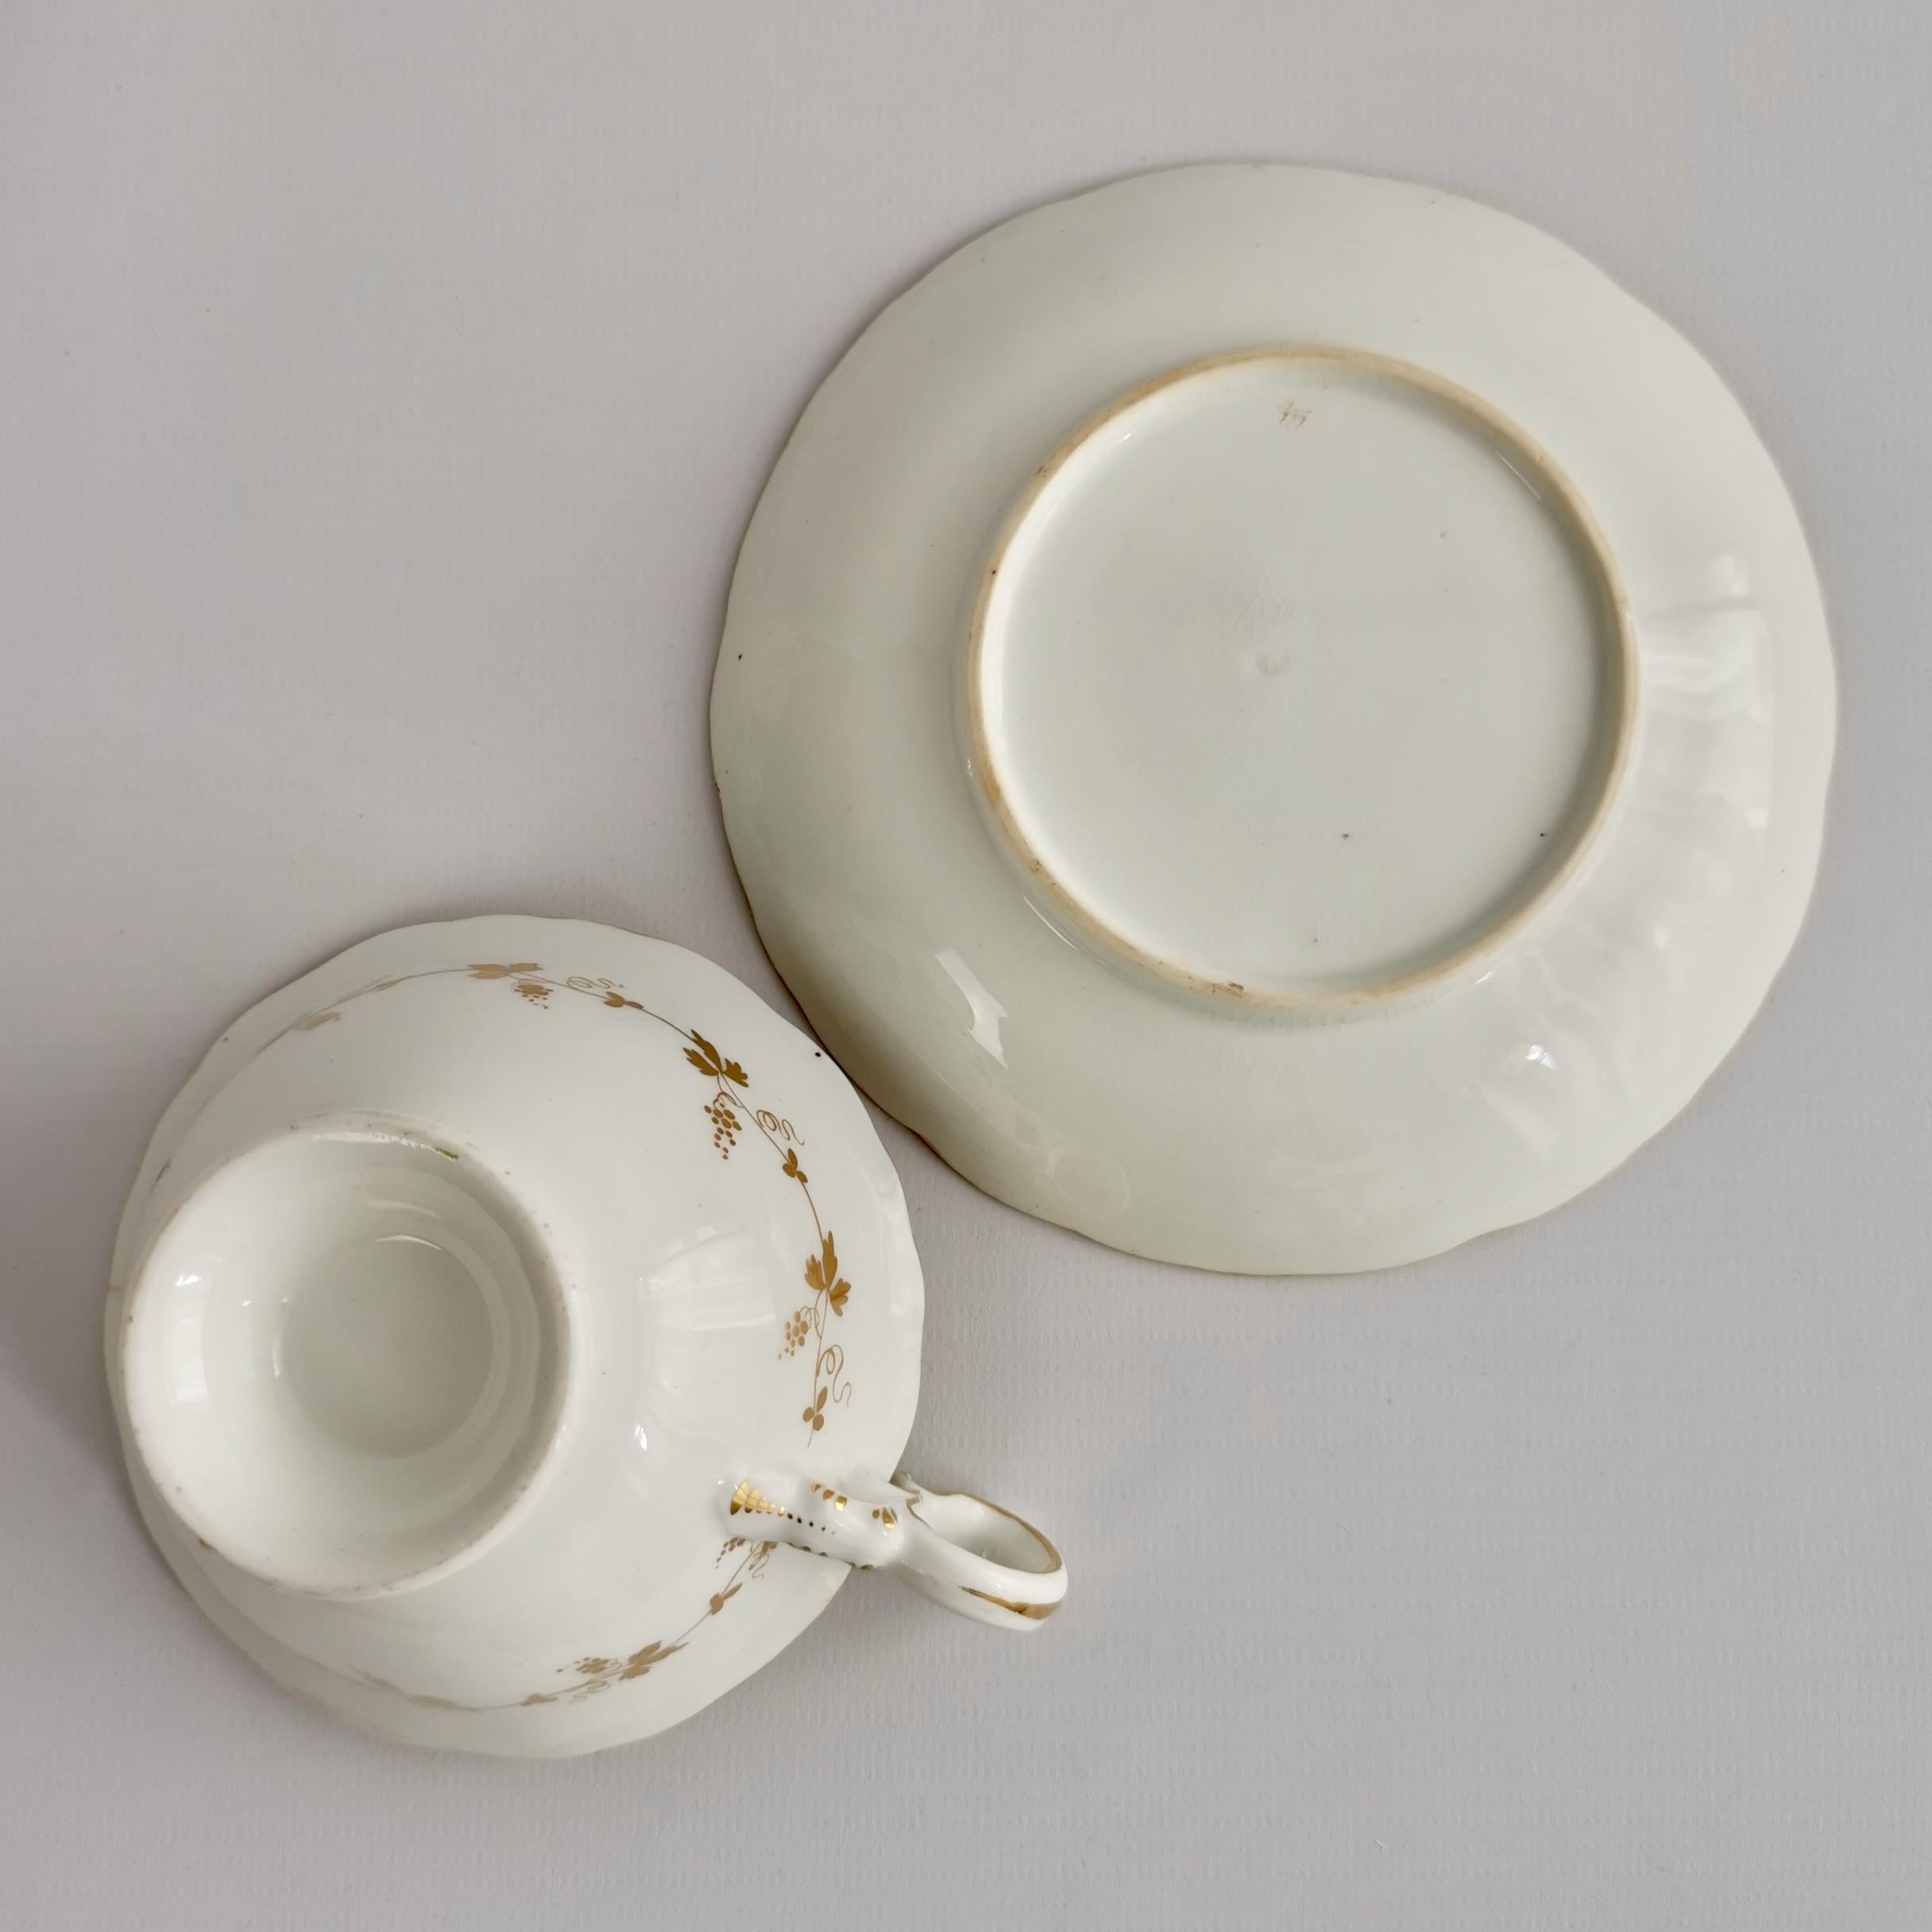 Coalport Porcelain Teacup, Beige with Landscapes, Rococo Revival, ca 1840 For Sale 4